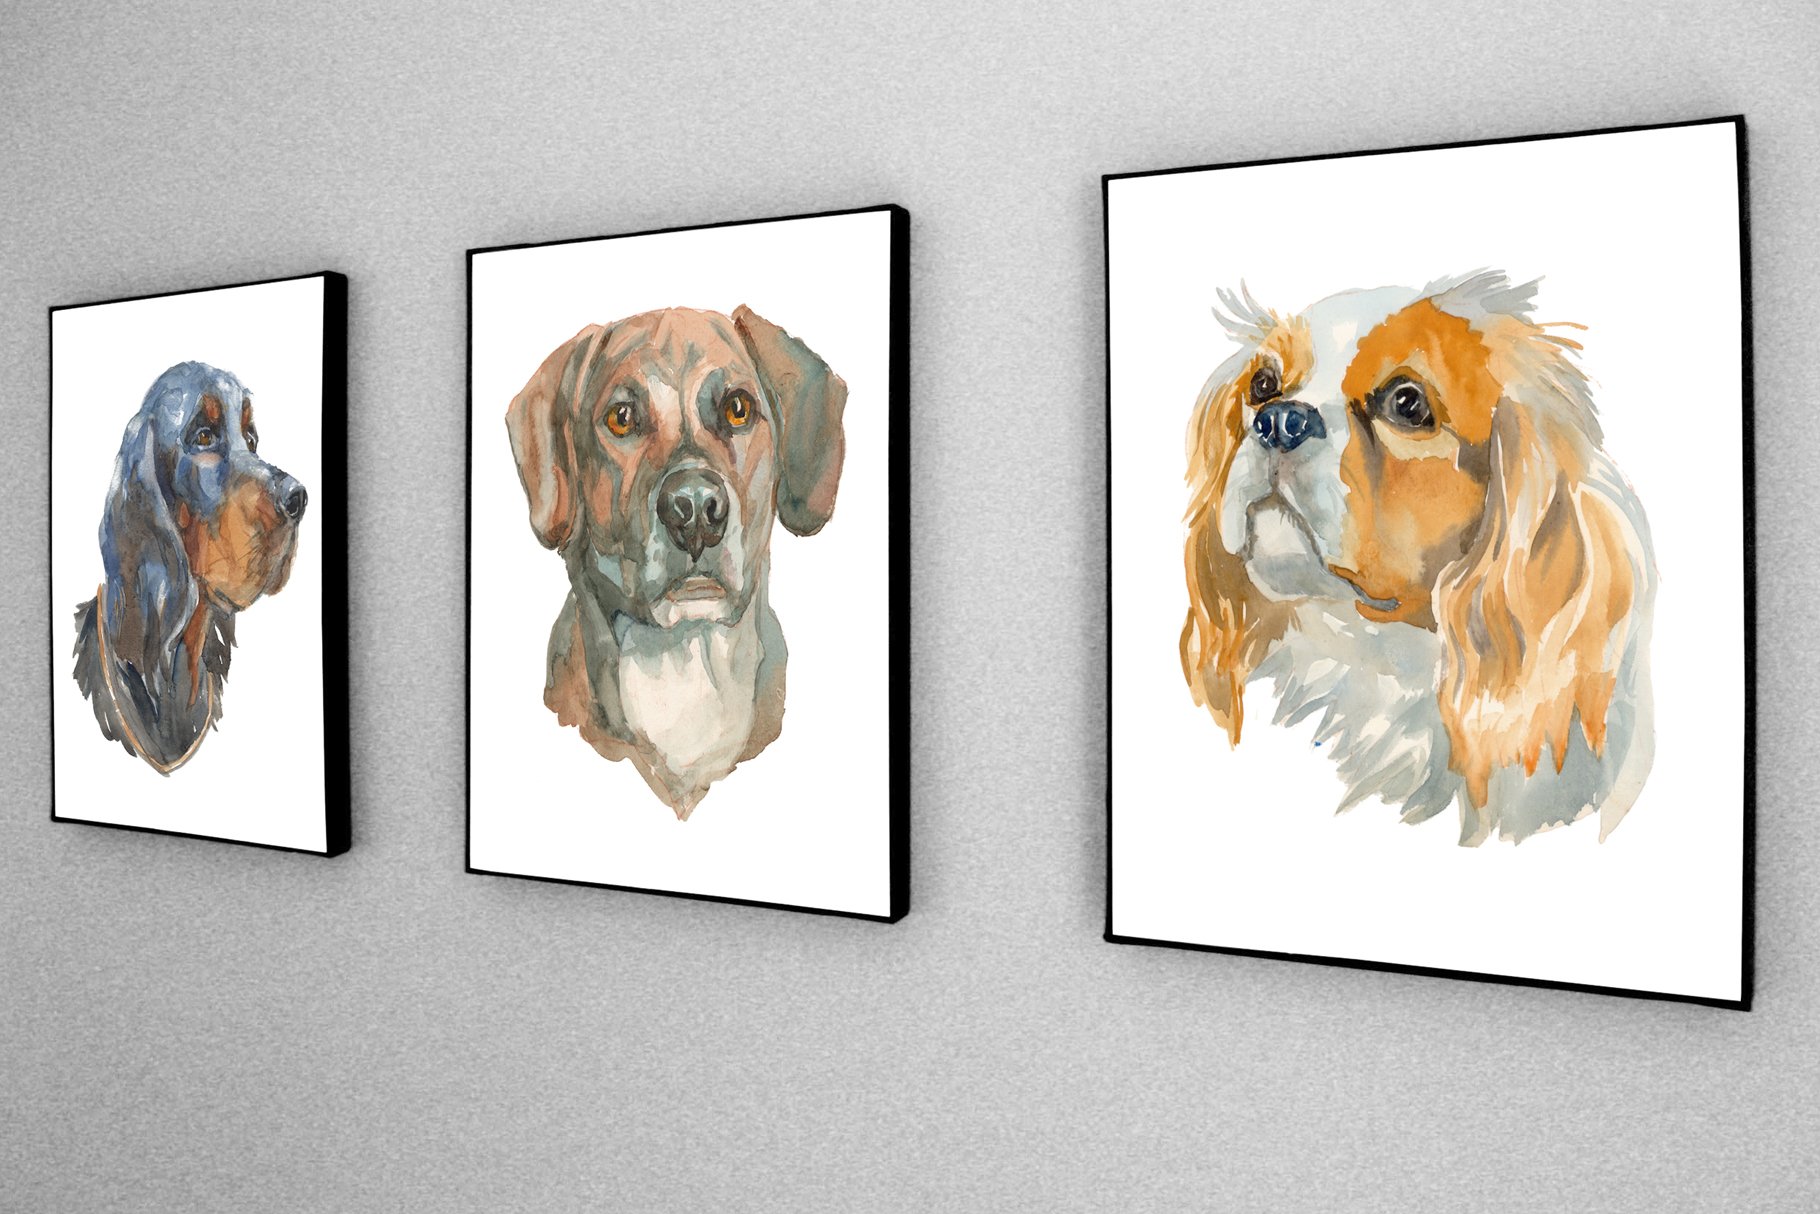 Hunter Dogs Watercolor Set 2.